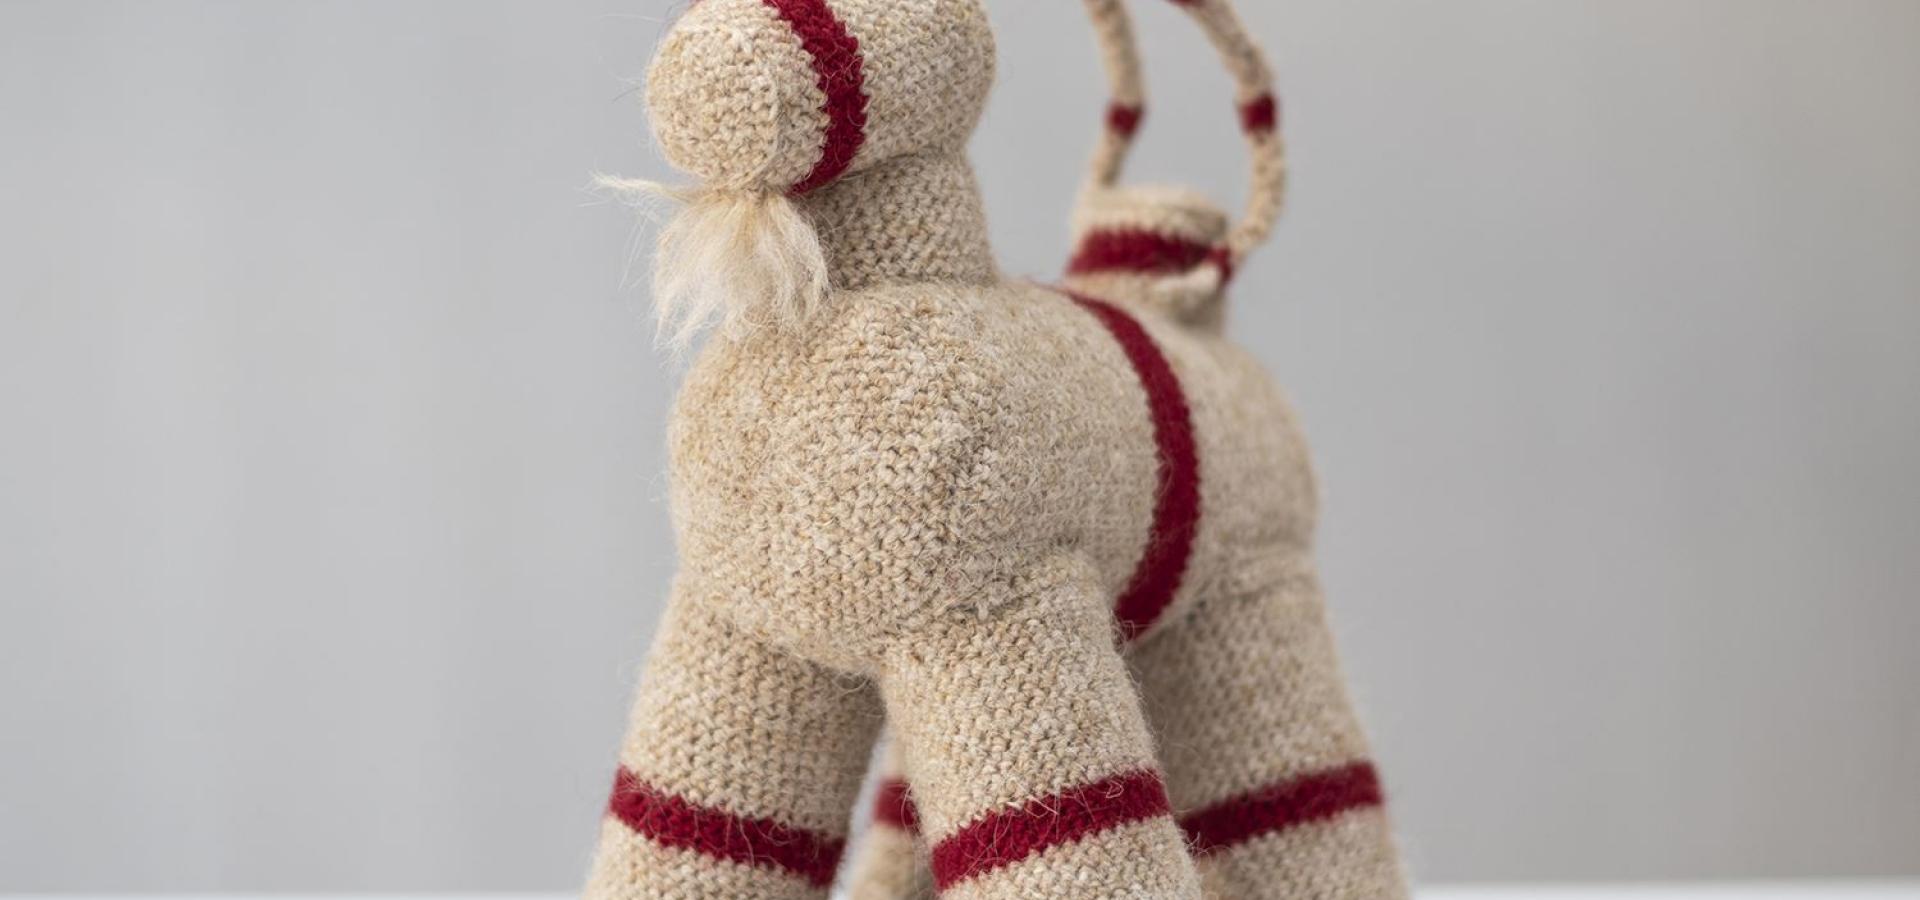 Crochet your own goat